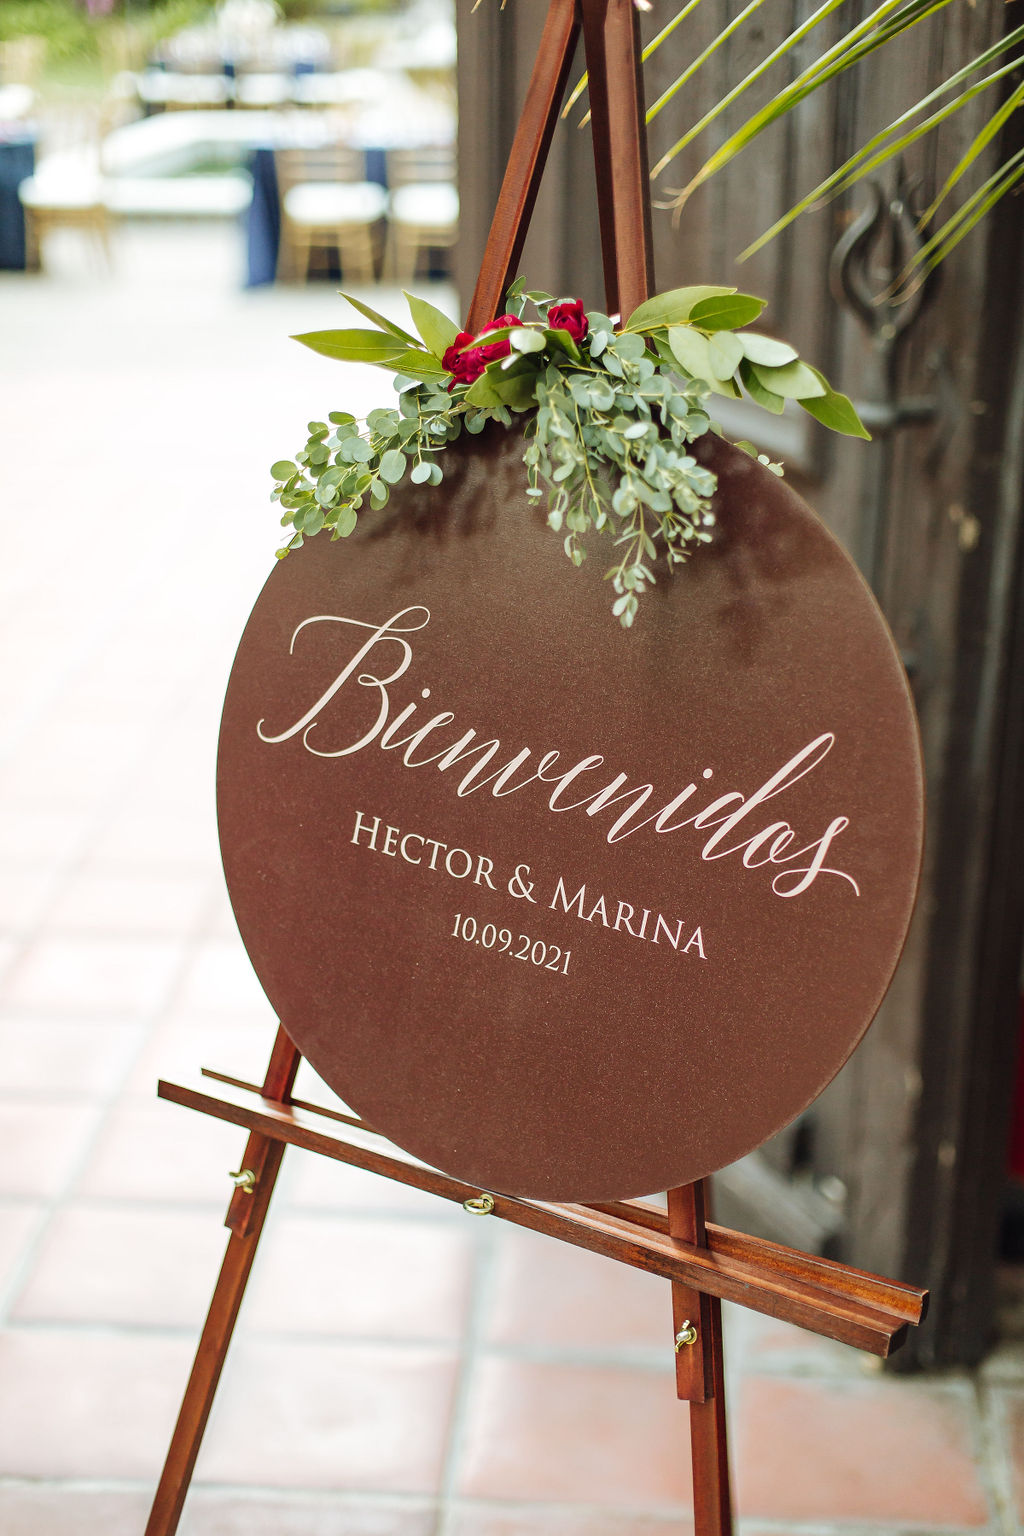 circular wedding welcome sign that reads bienvenidos